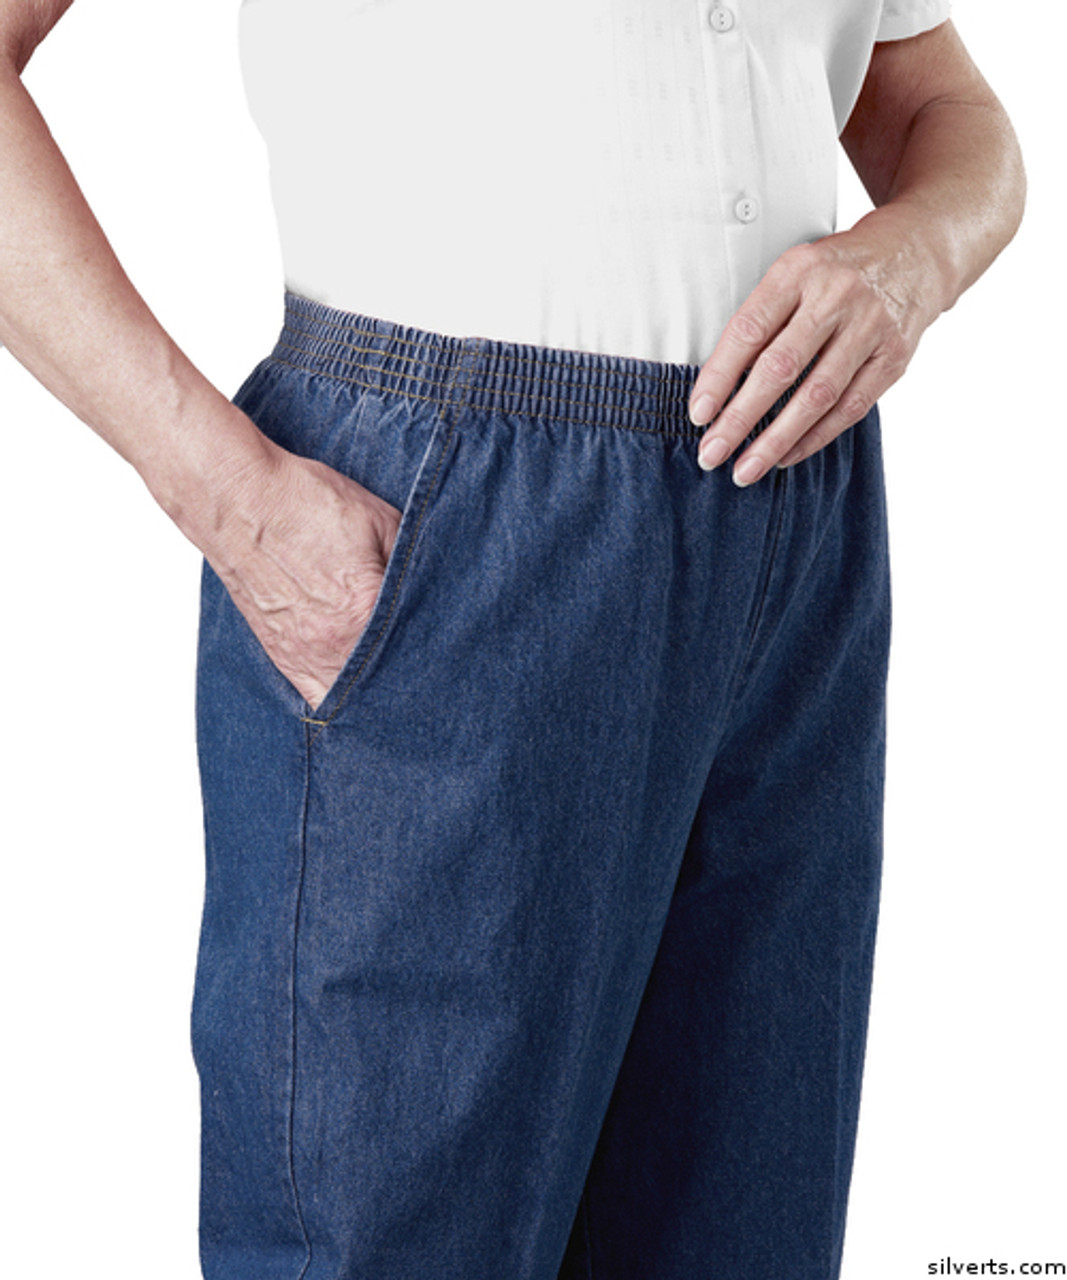 Silvert's 130300109 Arthritis Elastic Waist Pull On Jean Pants For Women With 2 Pockets , Size 20, BLUE DENIM